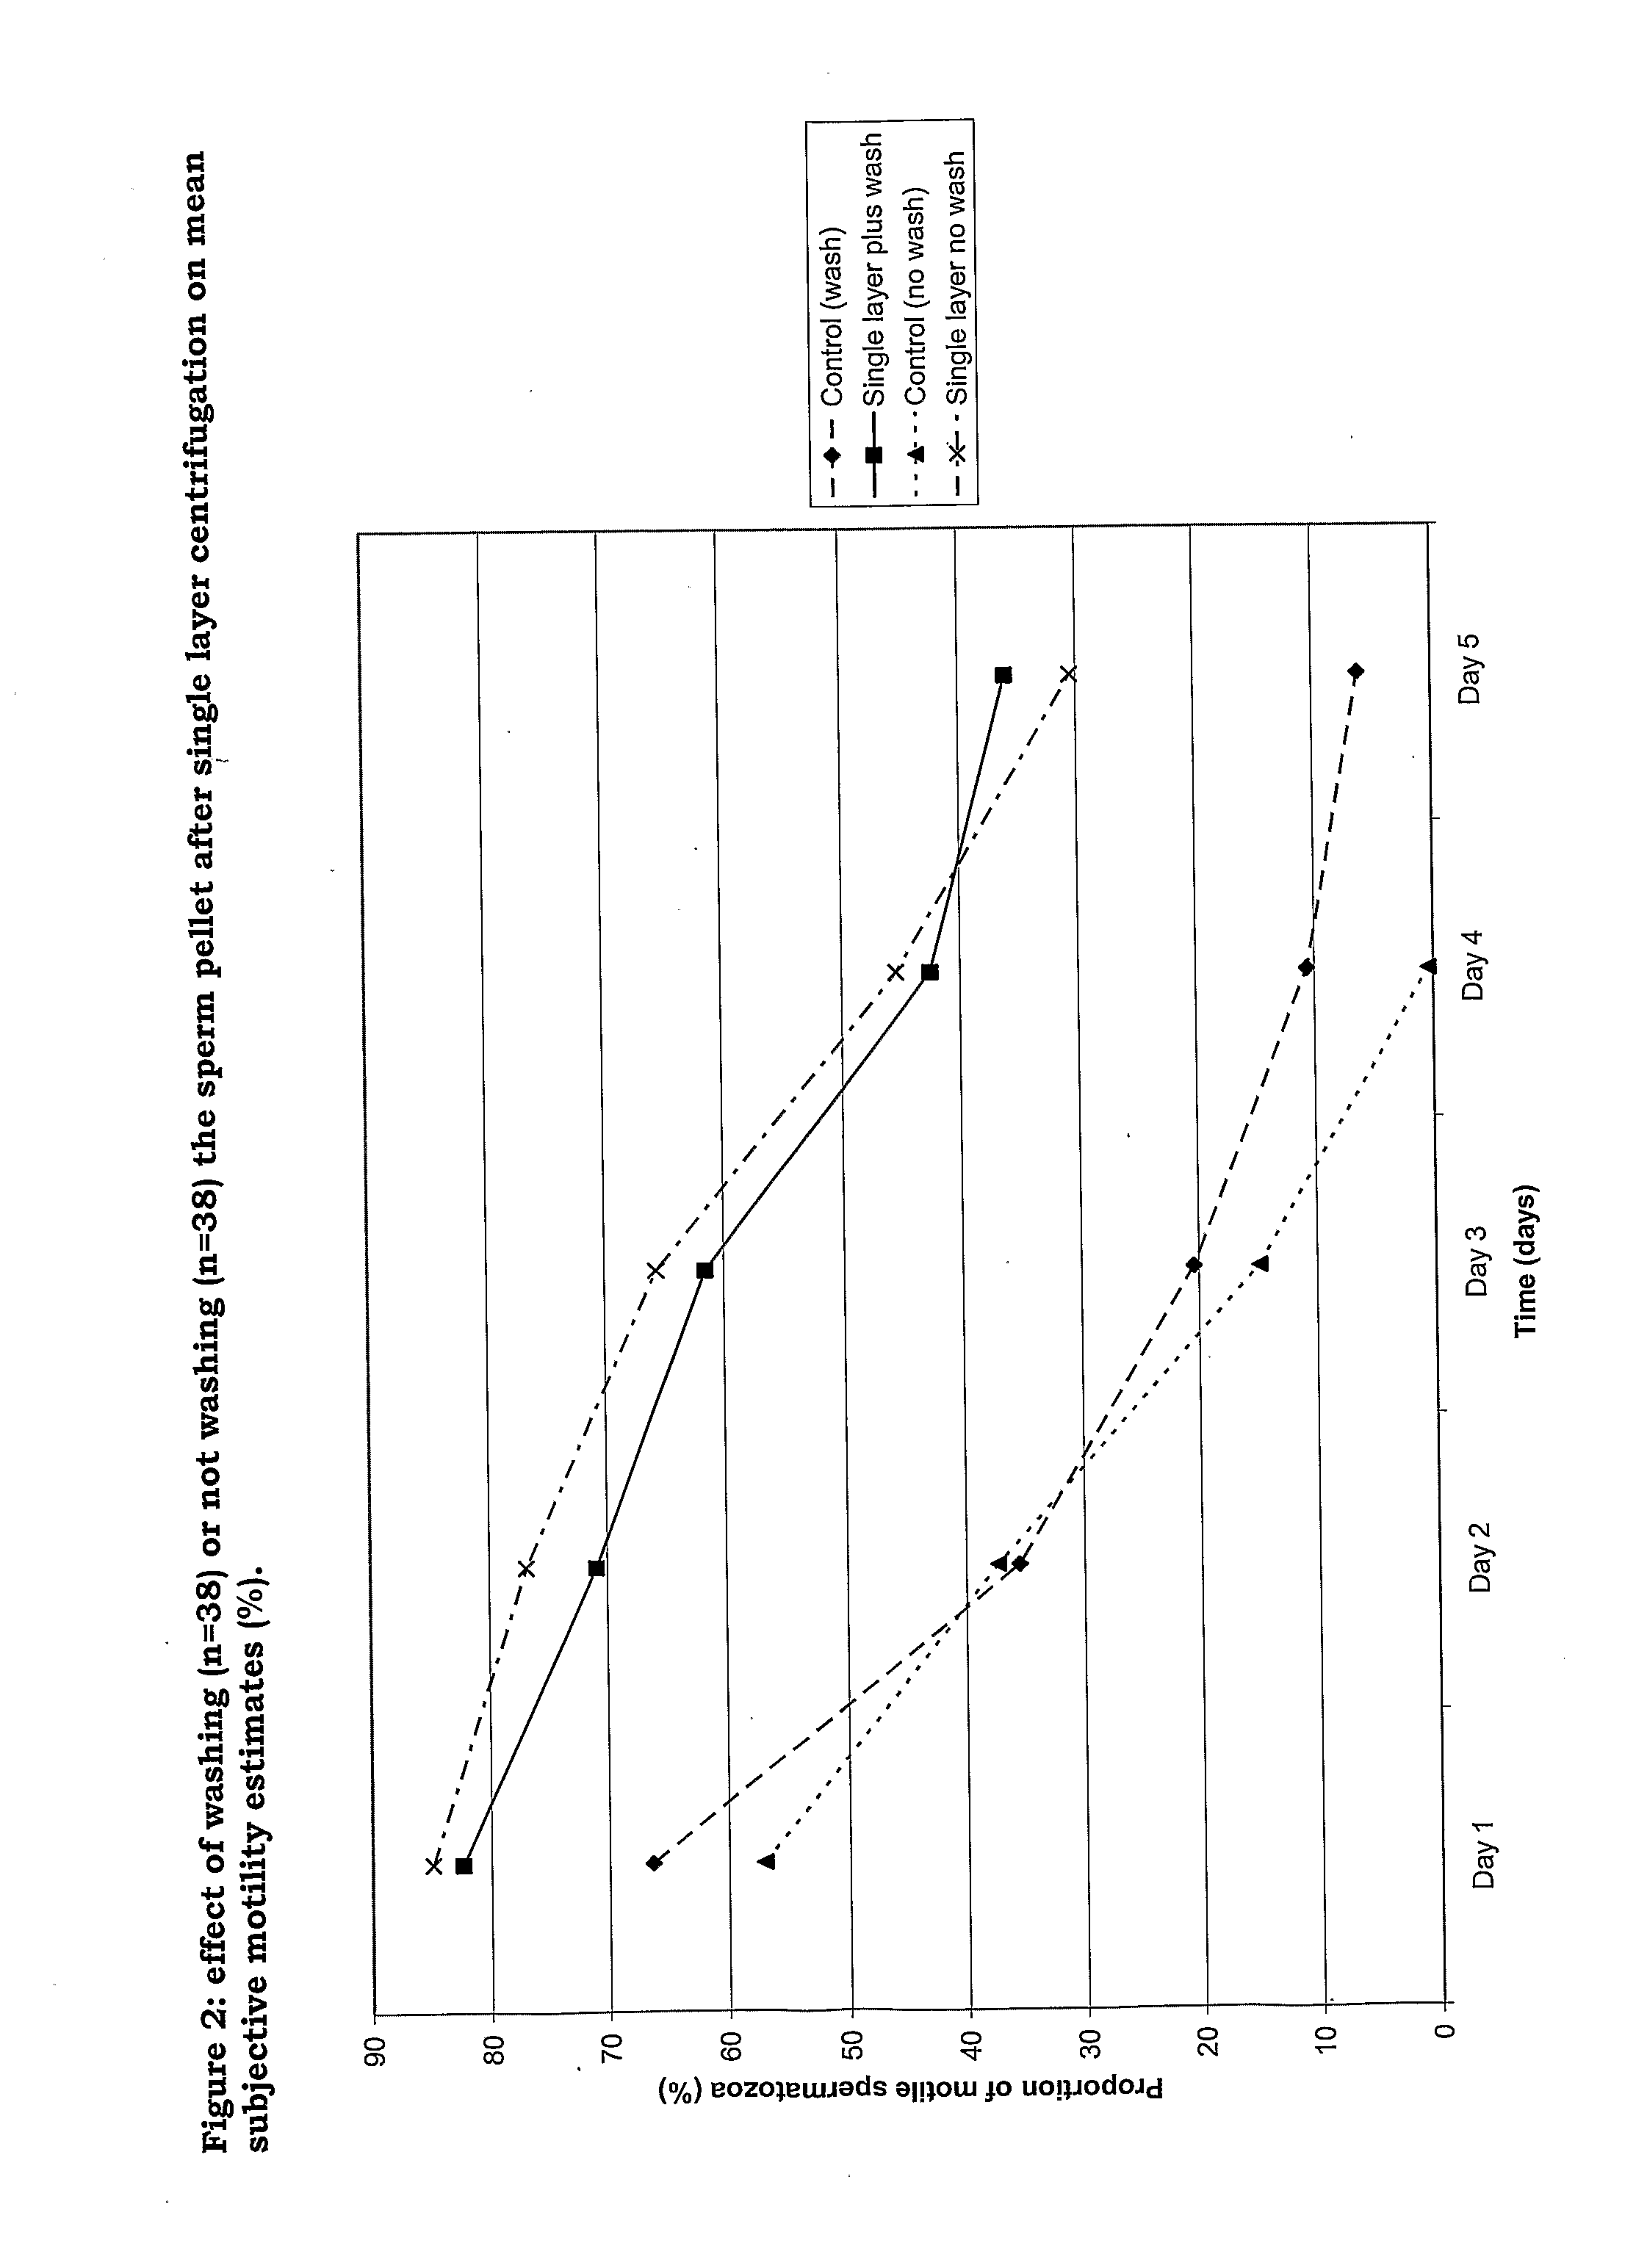 Composition for separating spermatozoa from a semen sample